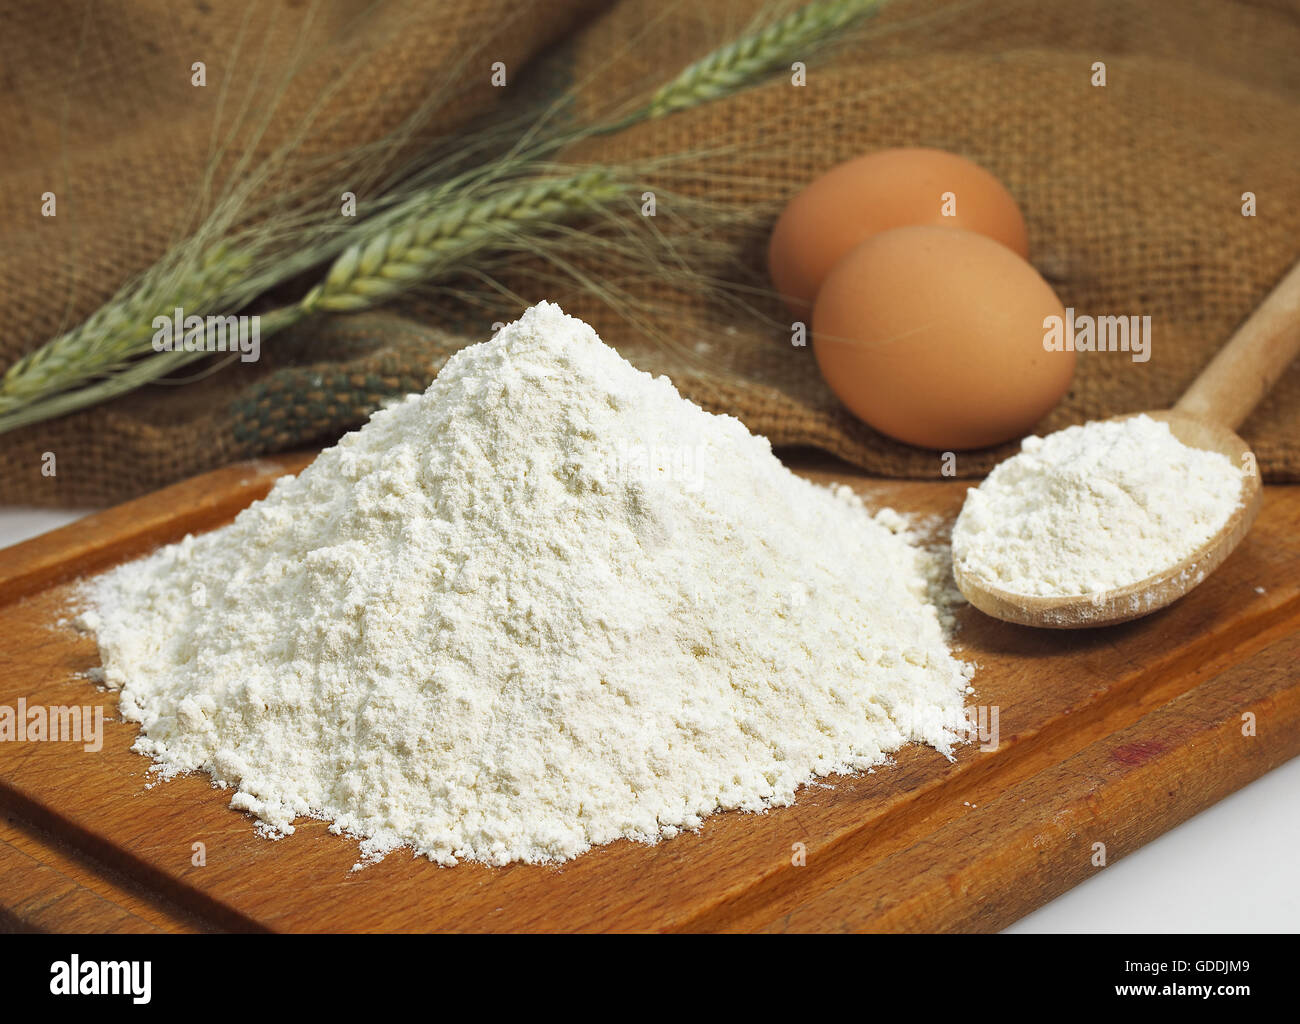 Wheat Flour and Eggs, Cake Ingredients Stock Photo